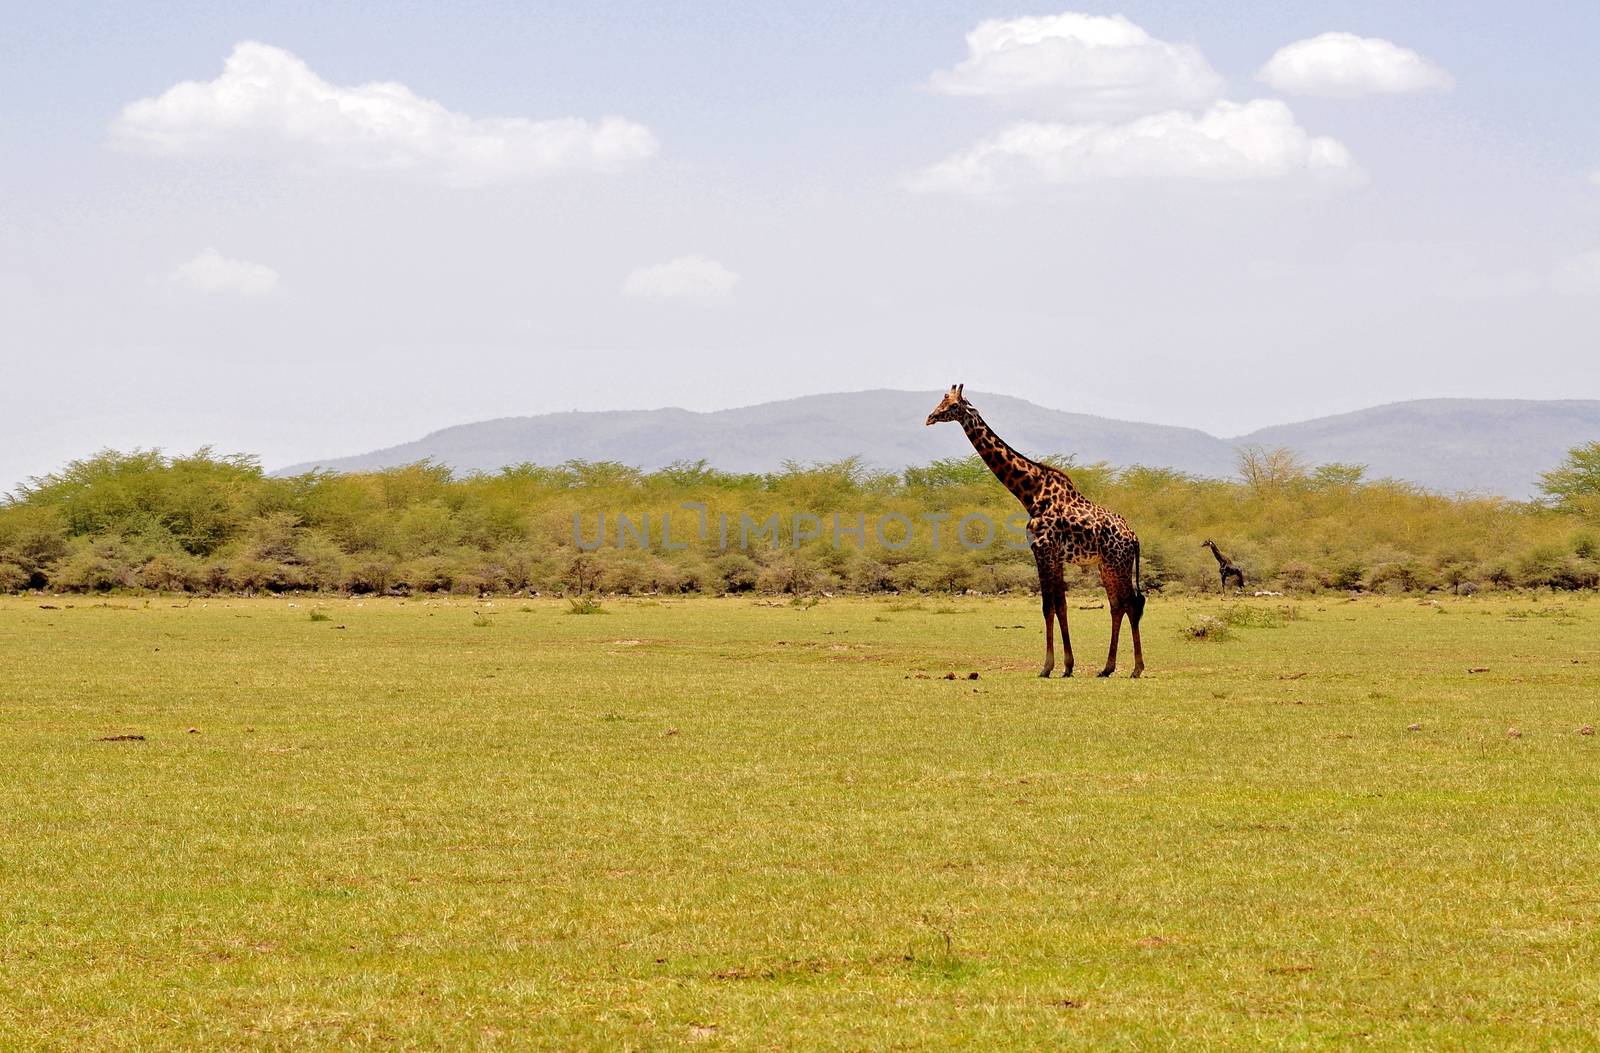 giraffe in tanzanian national park by moizhusein